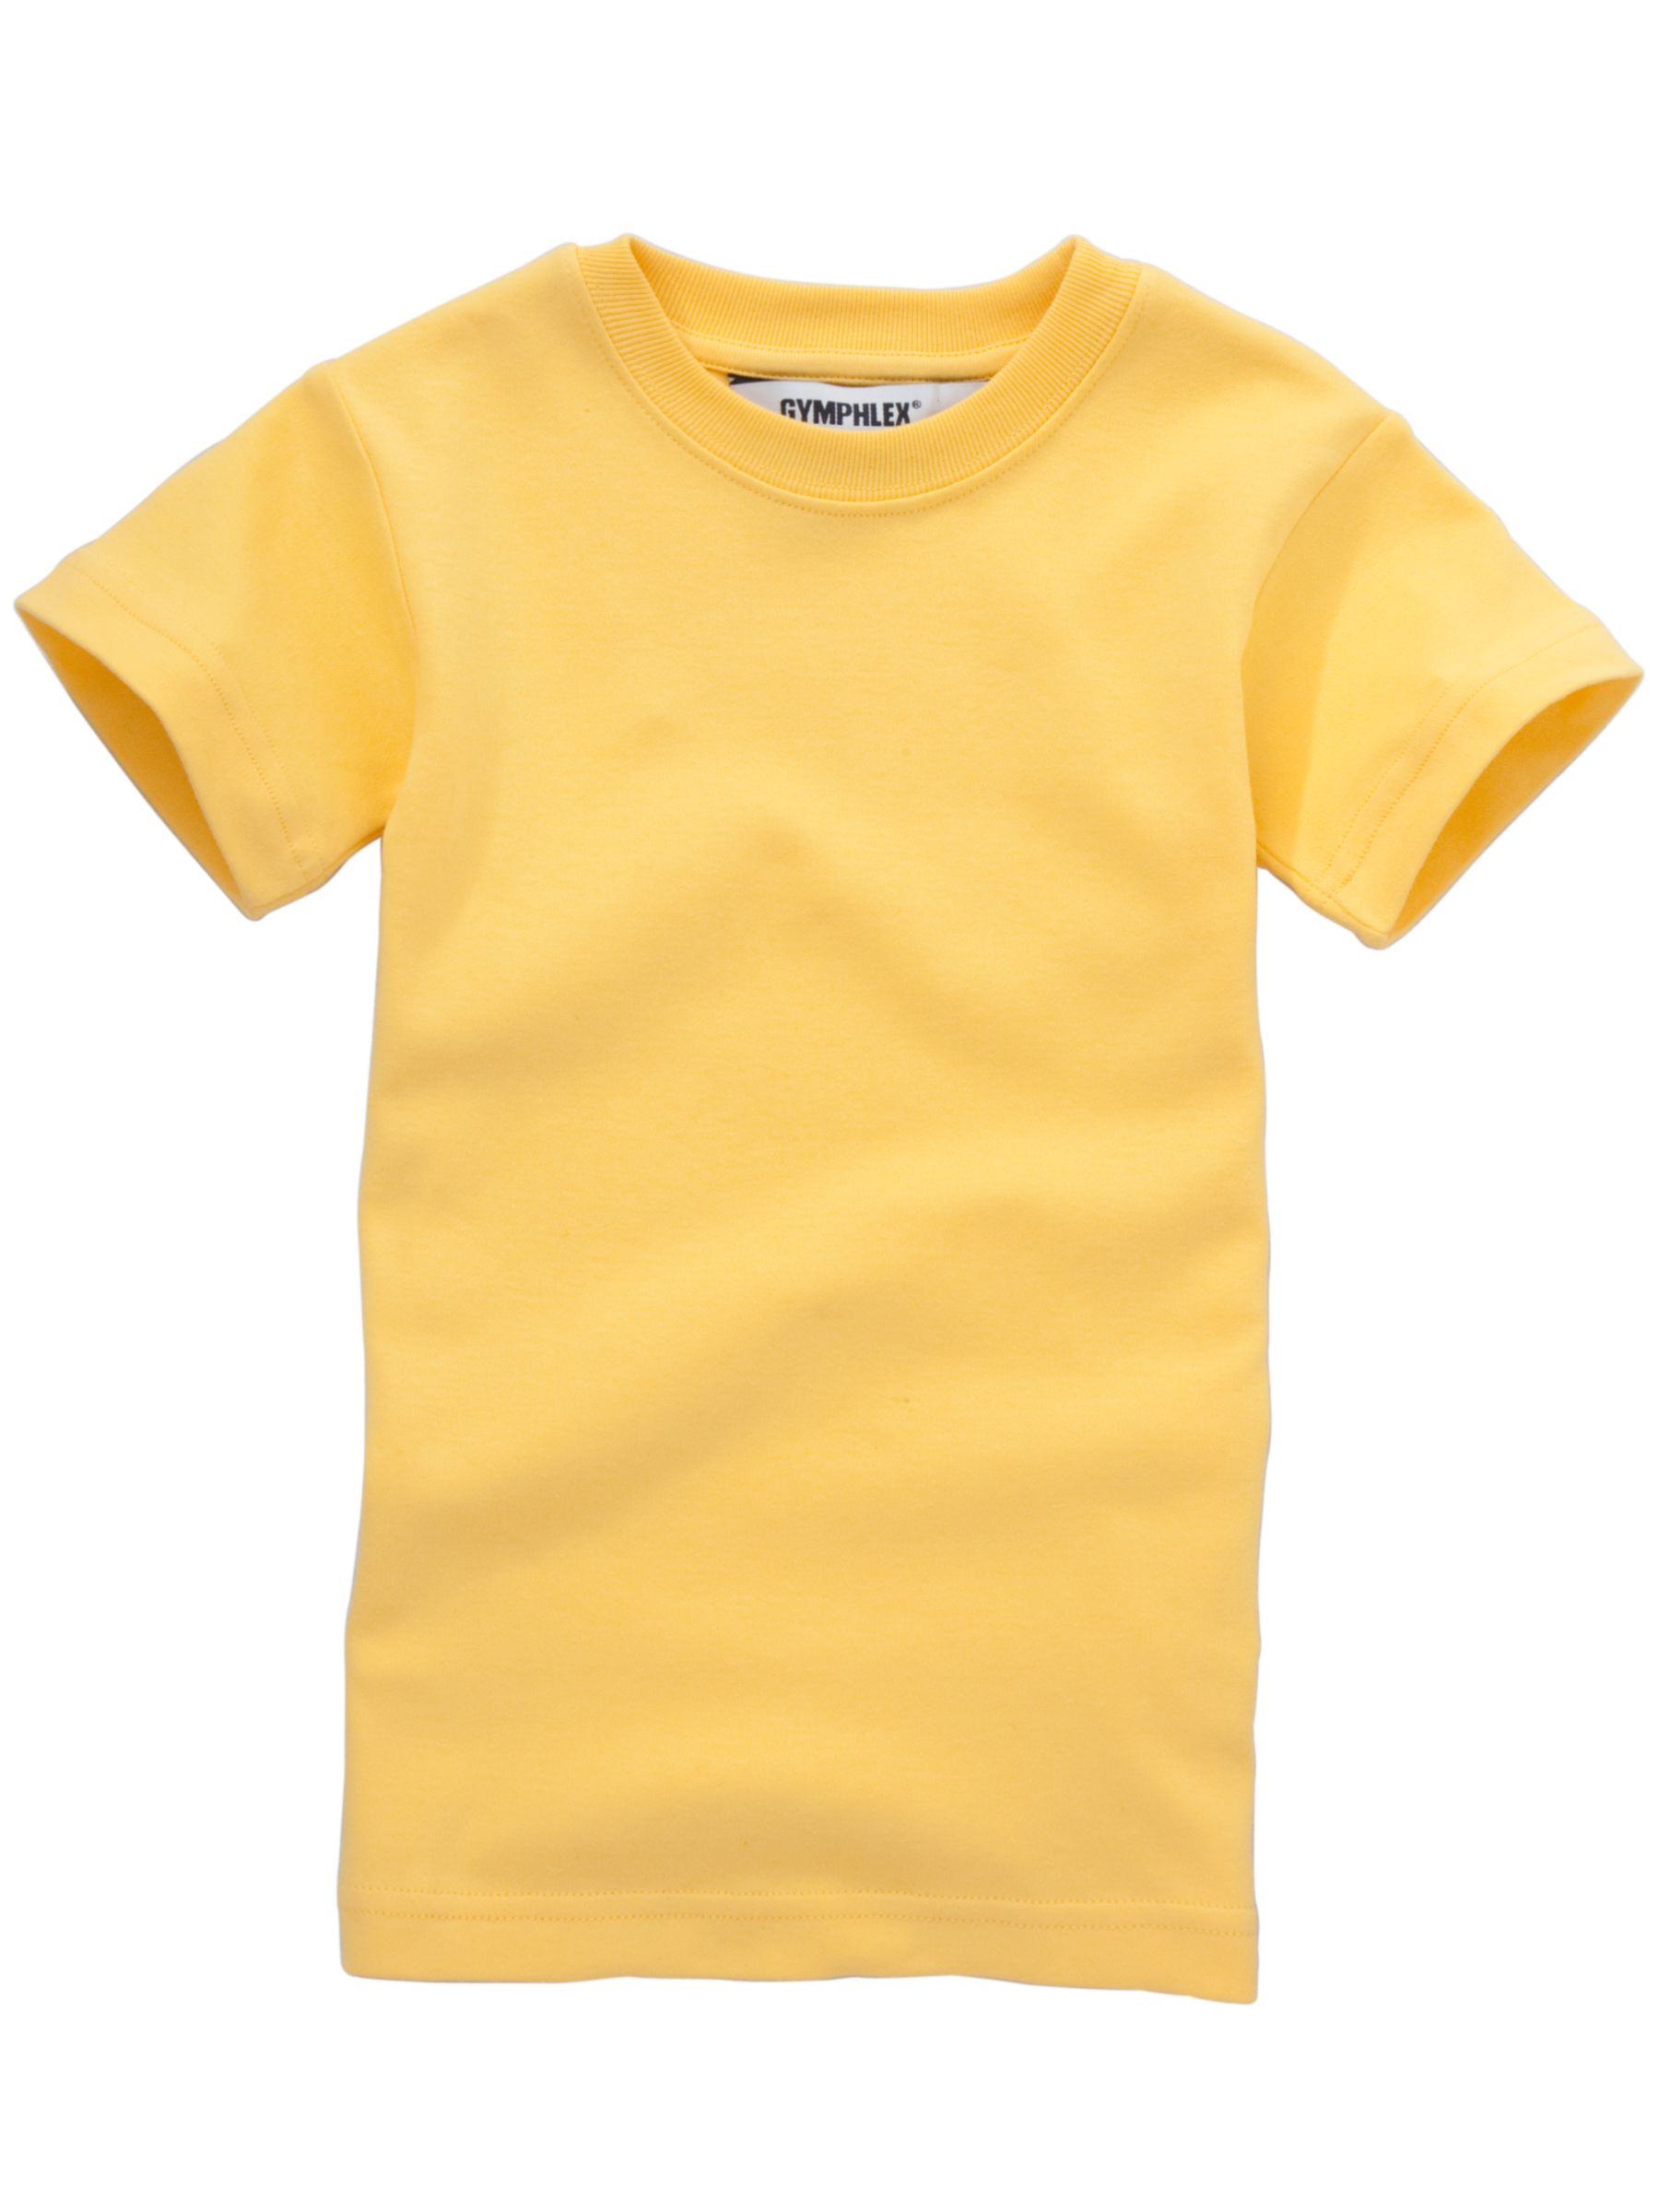 Other Schools School Unisex Sports T-Shirt, Yellow